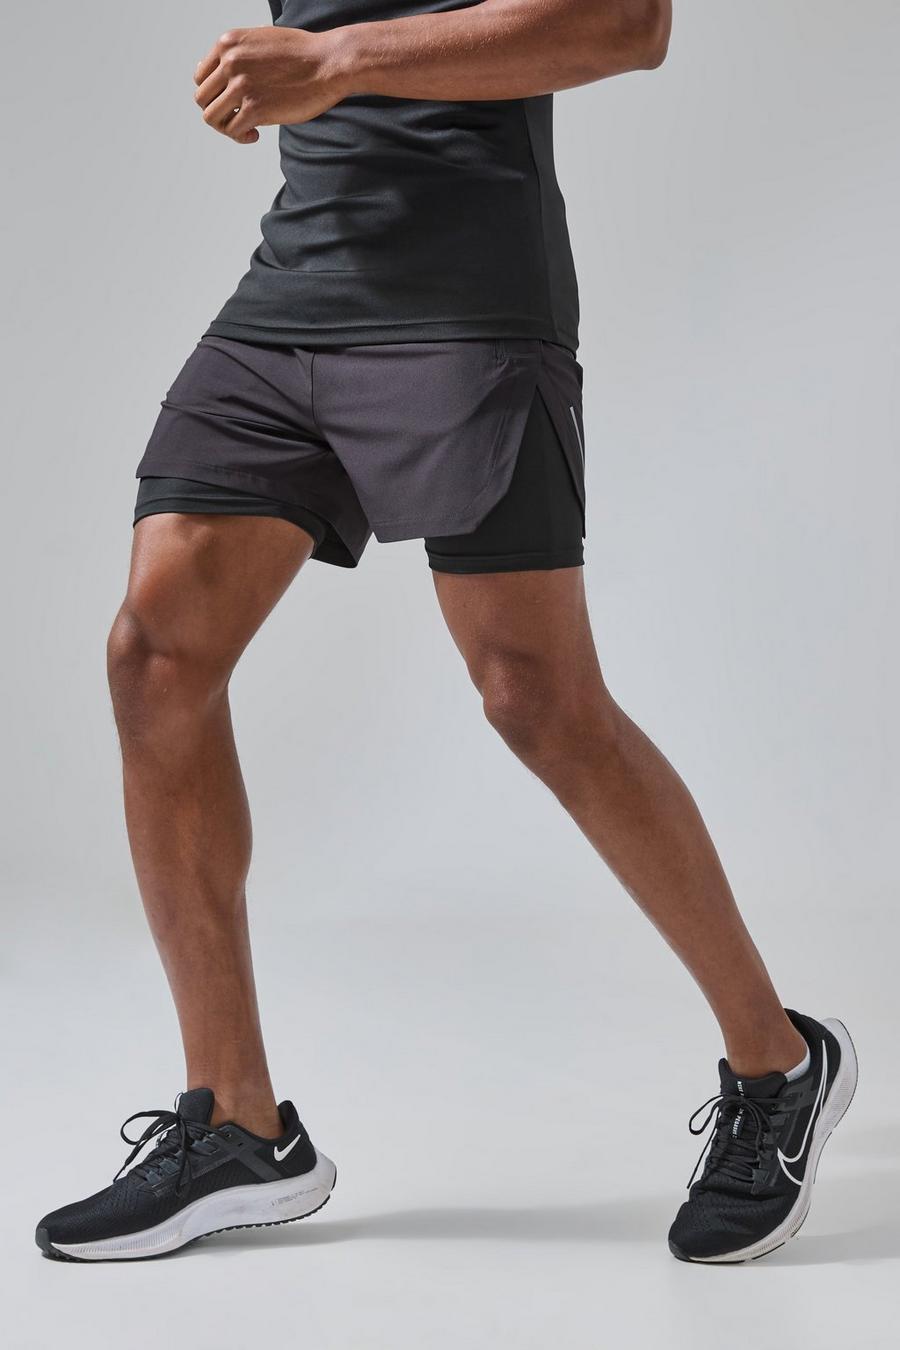 Pantaloncini Man Active 2 in 1 con spacco estremo da 7,6 cm, Black